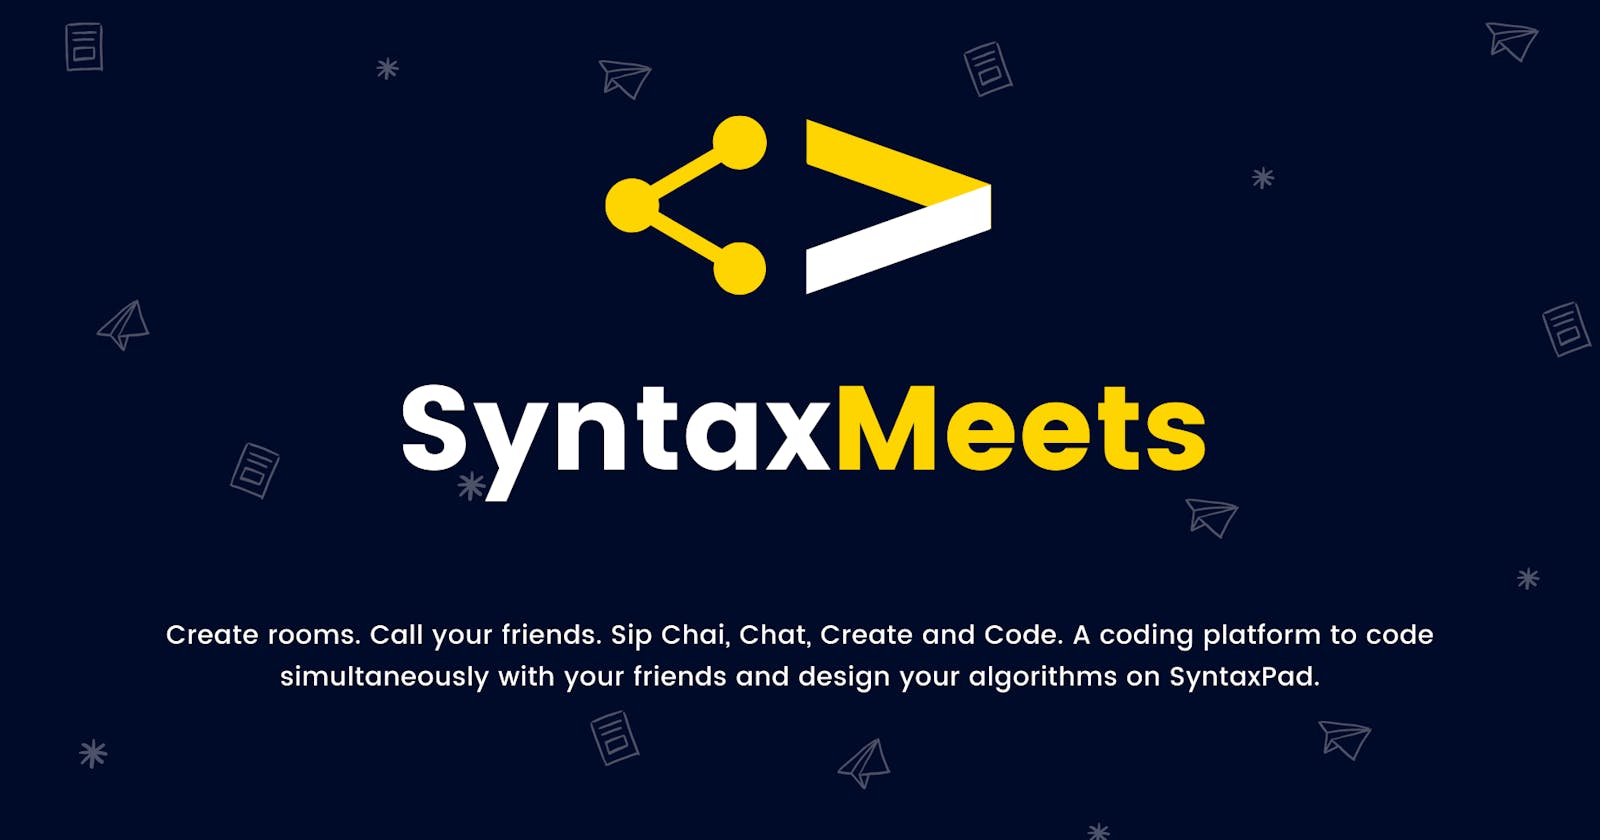 SyntaxMeets - The curious Saga 💫